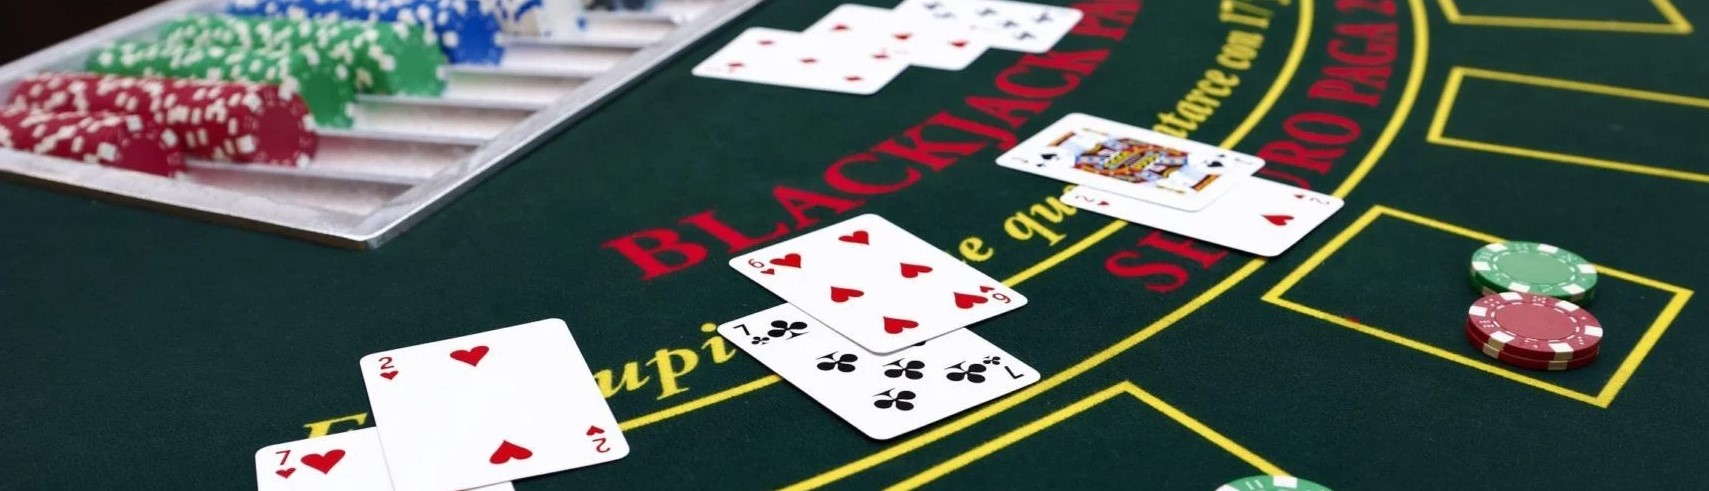 Slots Empire Casino Blackjack___2